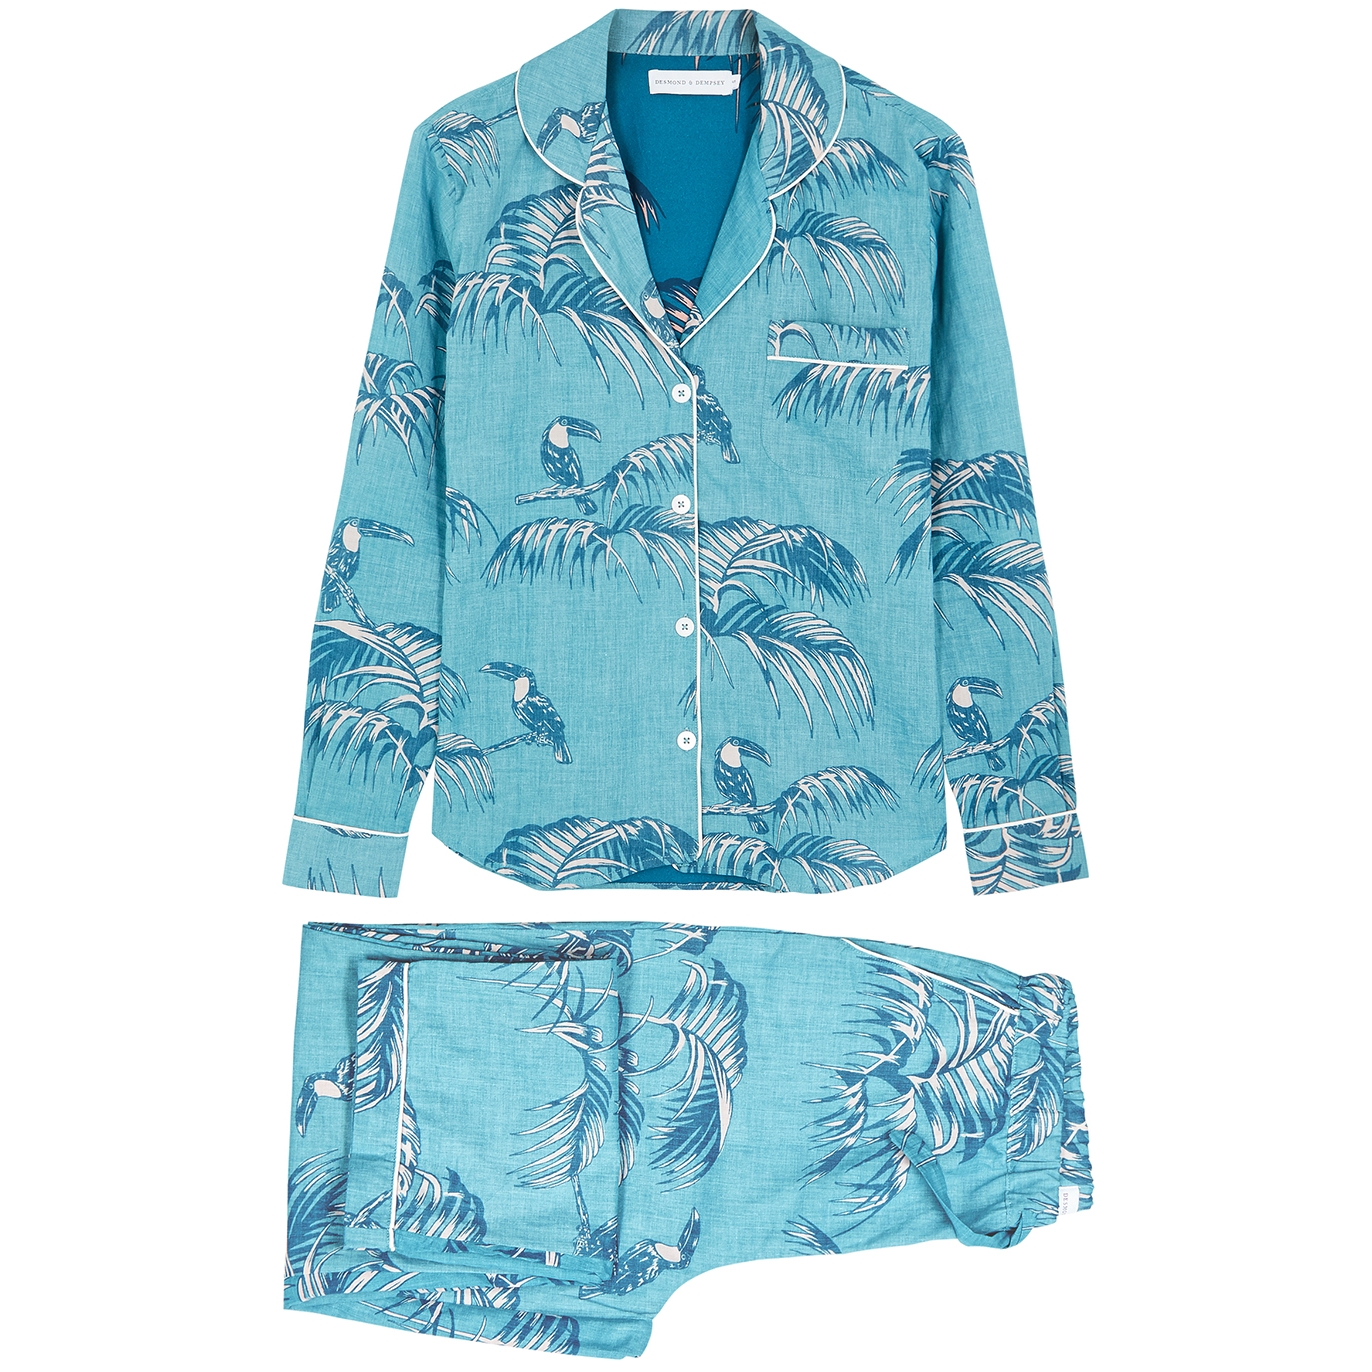 Desmond & Dempsey Bocas Printed Cotton Pyjama Set - Blue - M